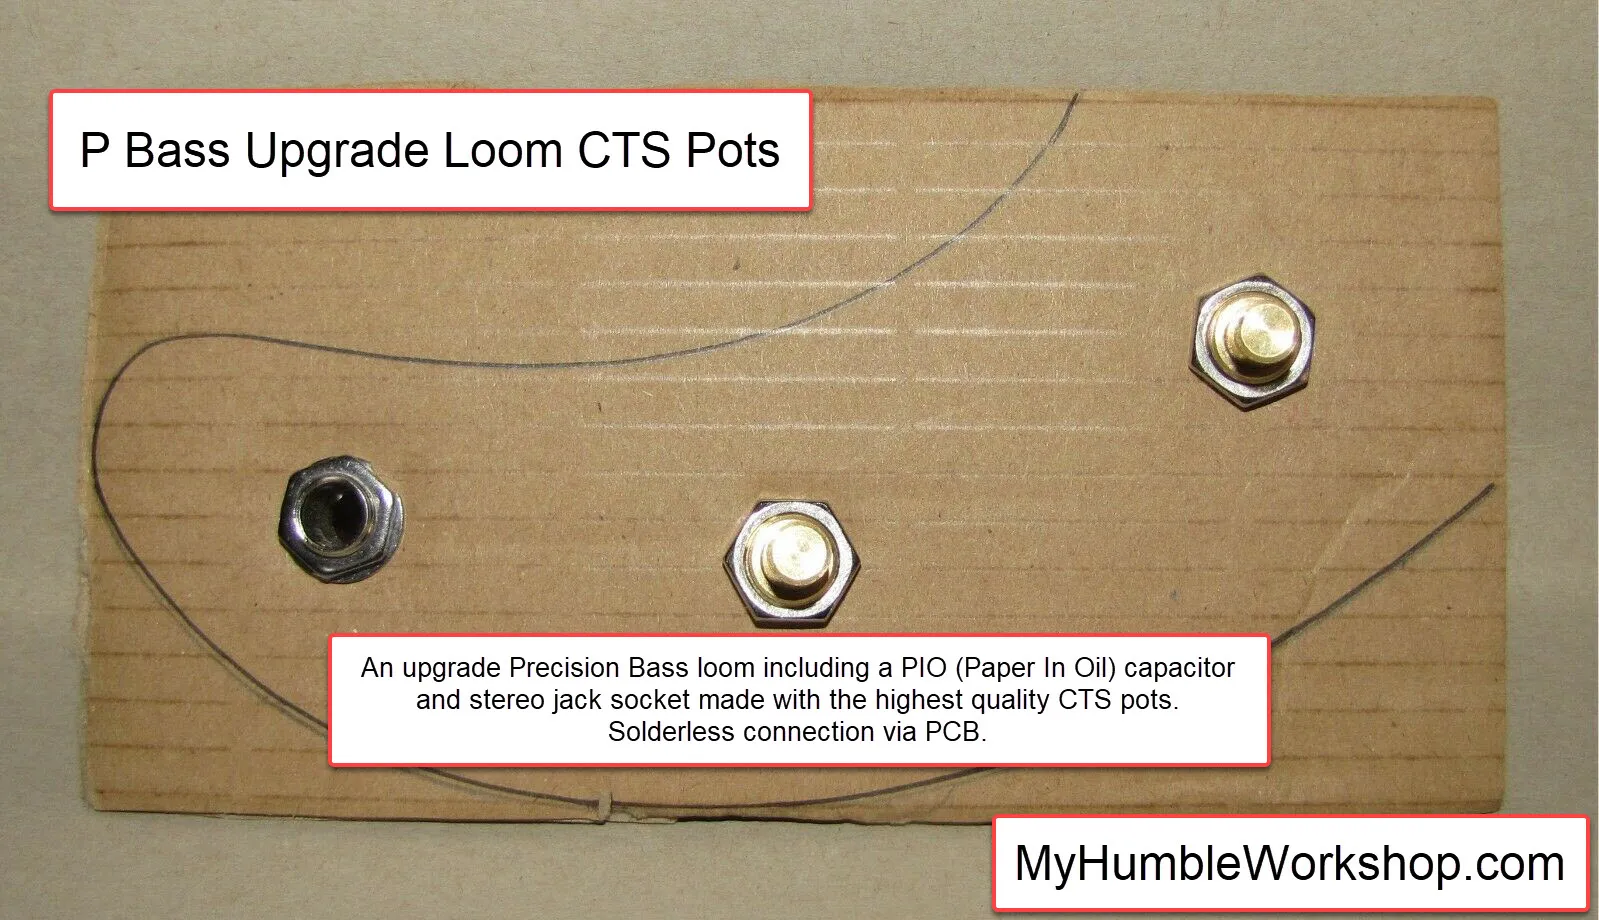 P Bass Upgrade Loom CTS Pots